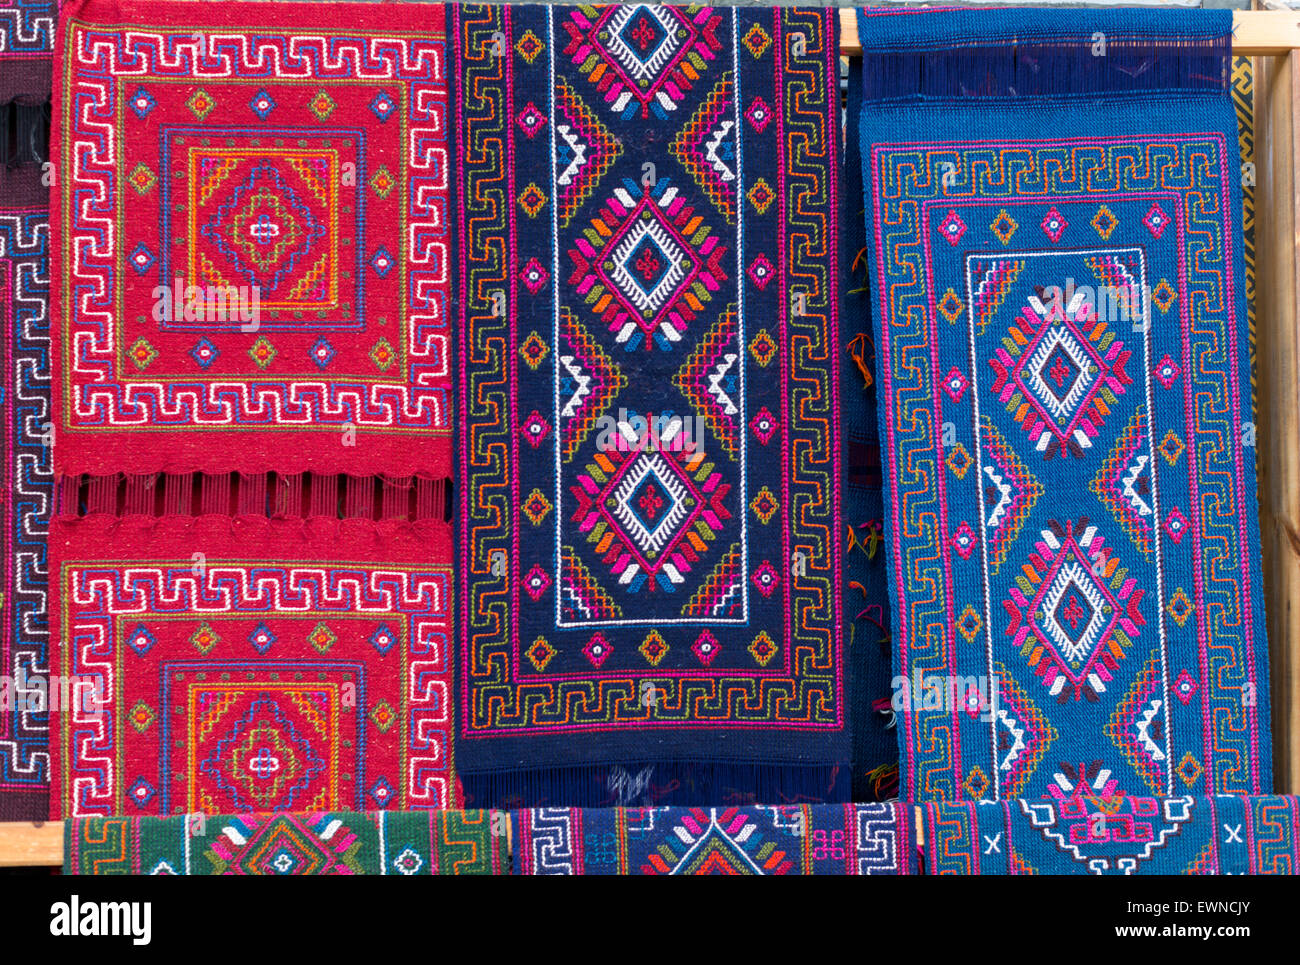 Handwoven textiles, Bumthang, Bhutan Stock Photo